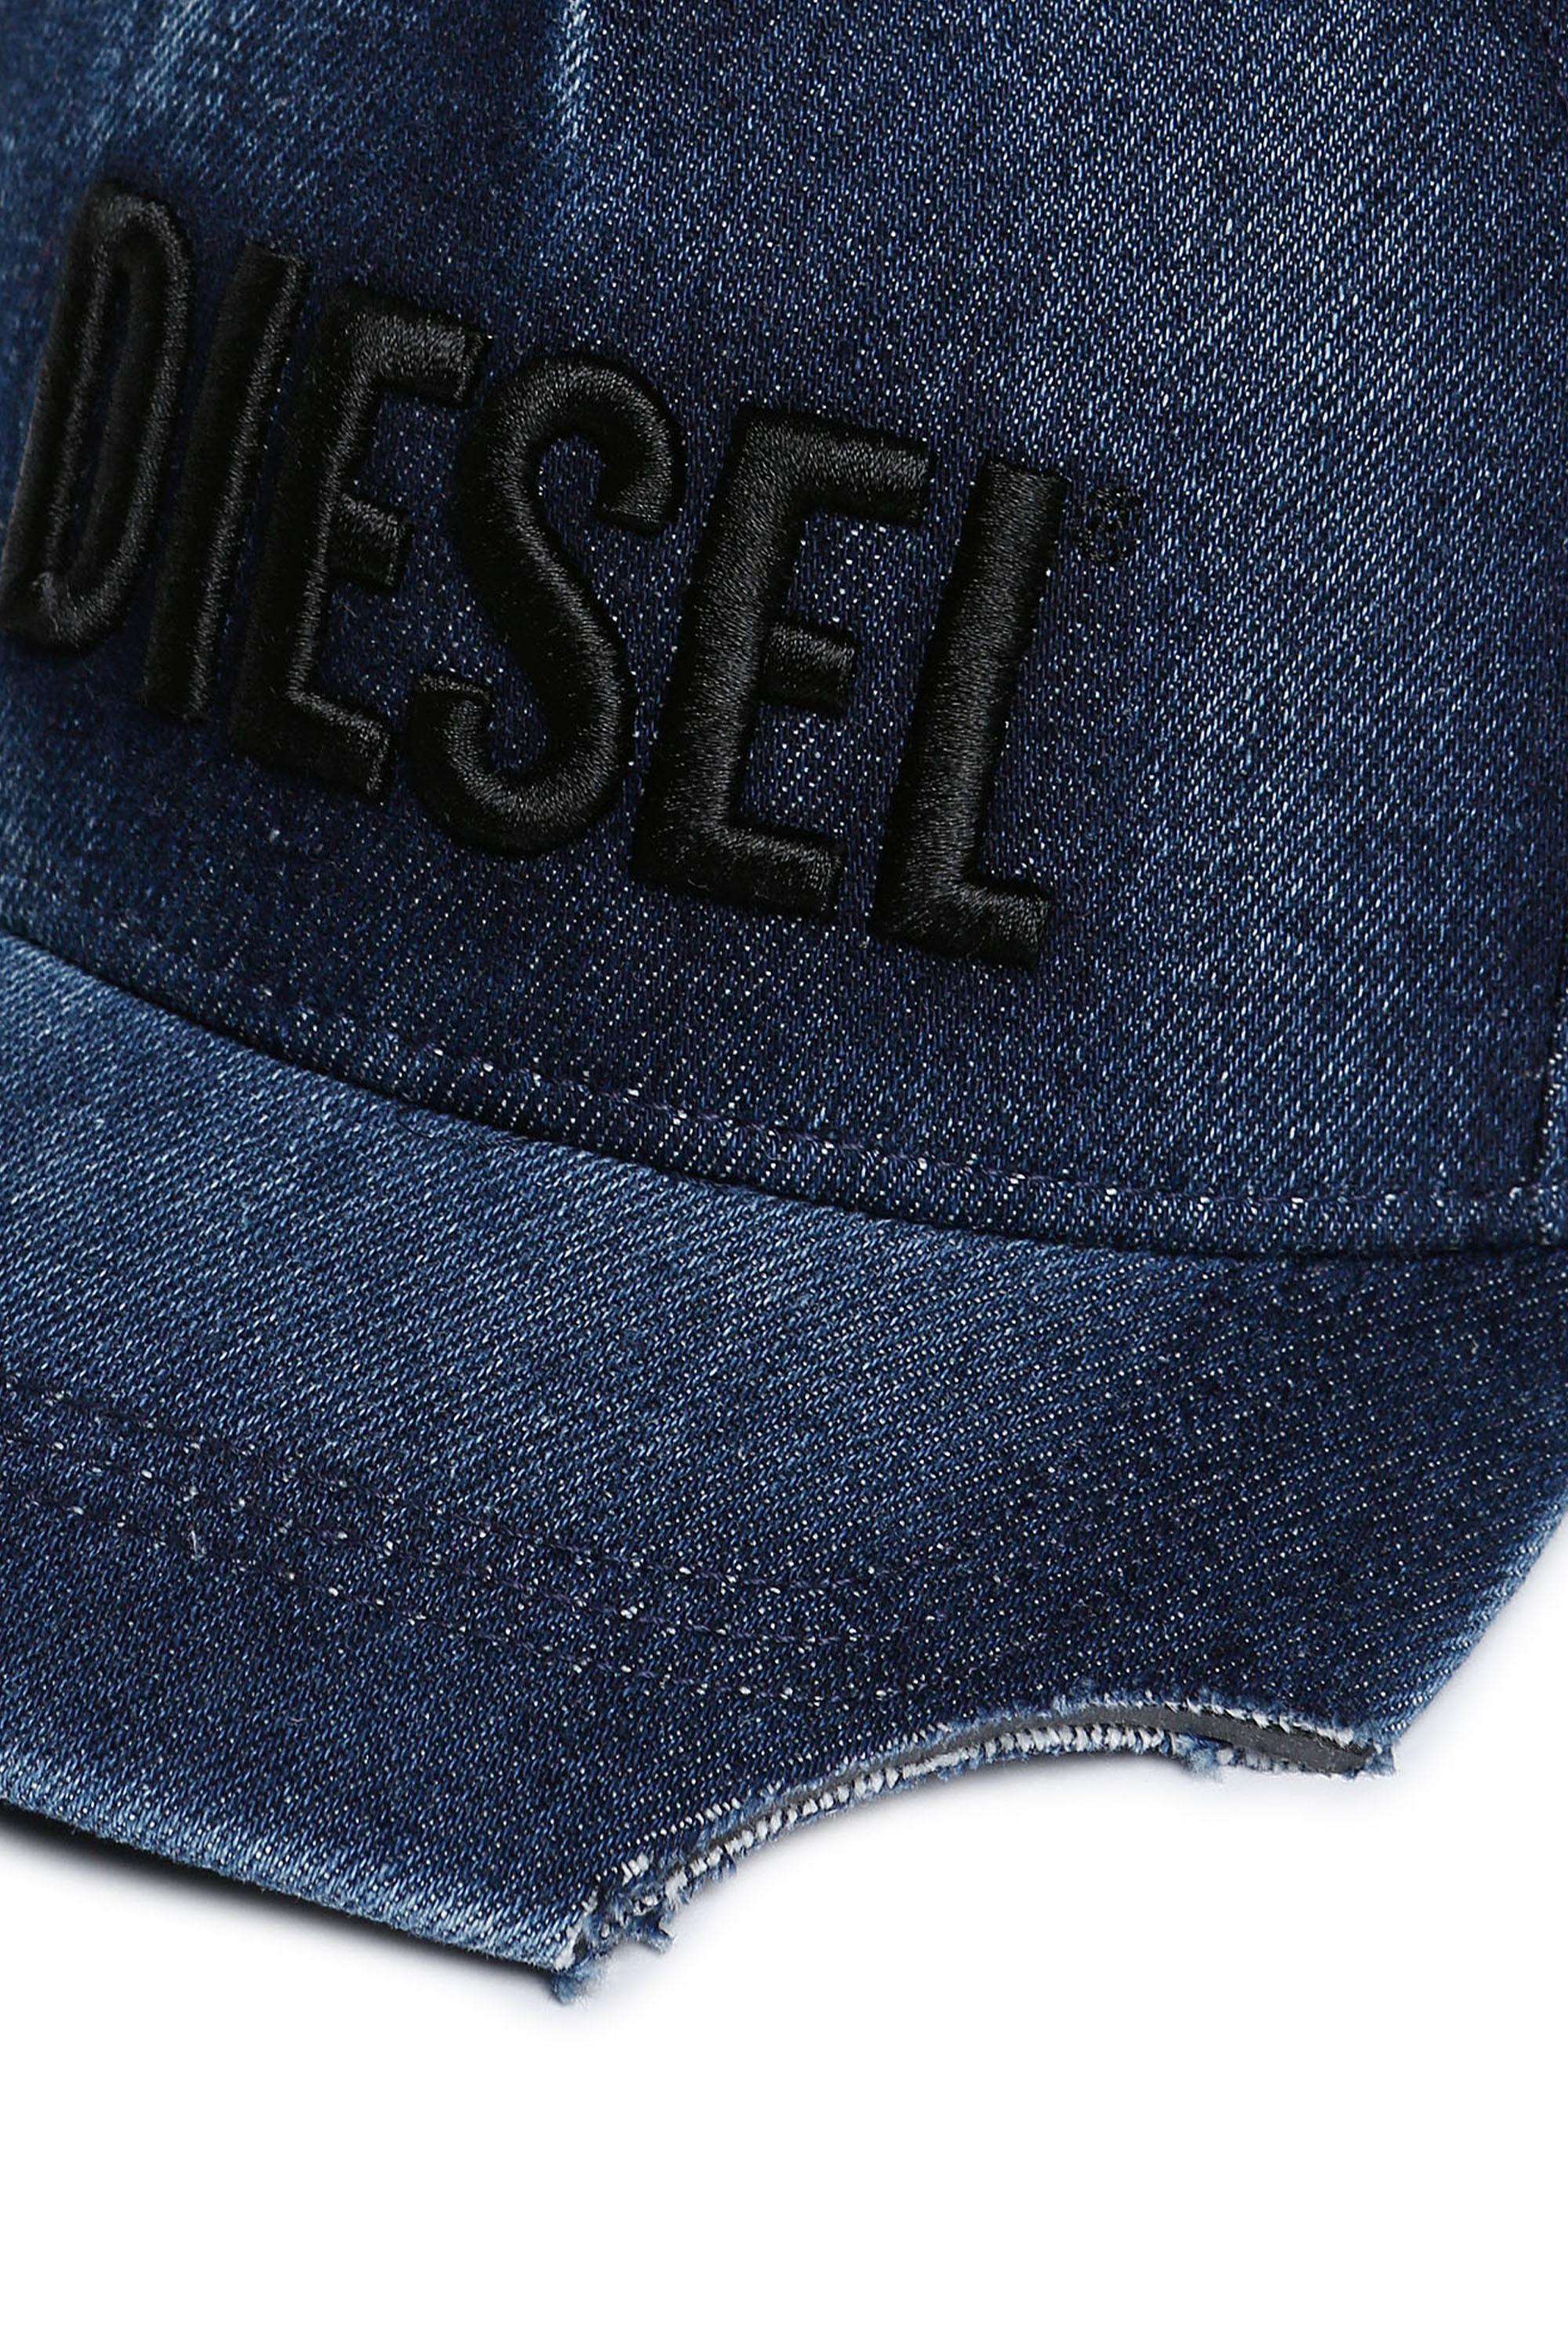 Diesel - FBETY, Blue - Image 3